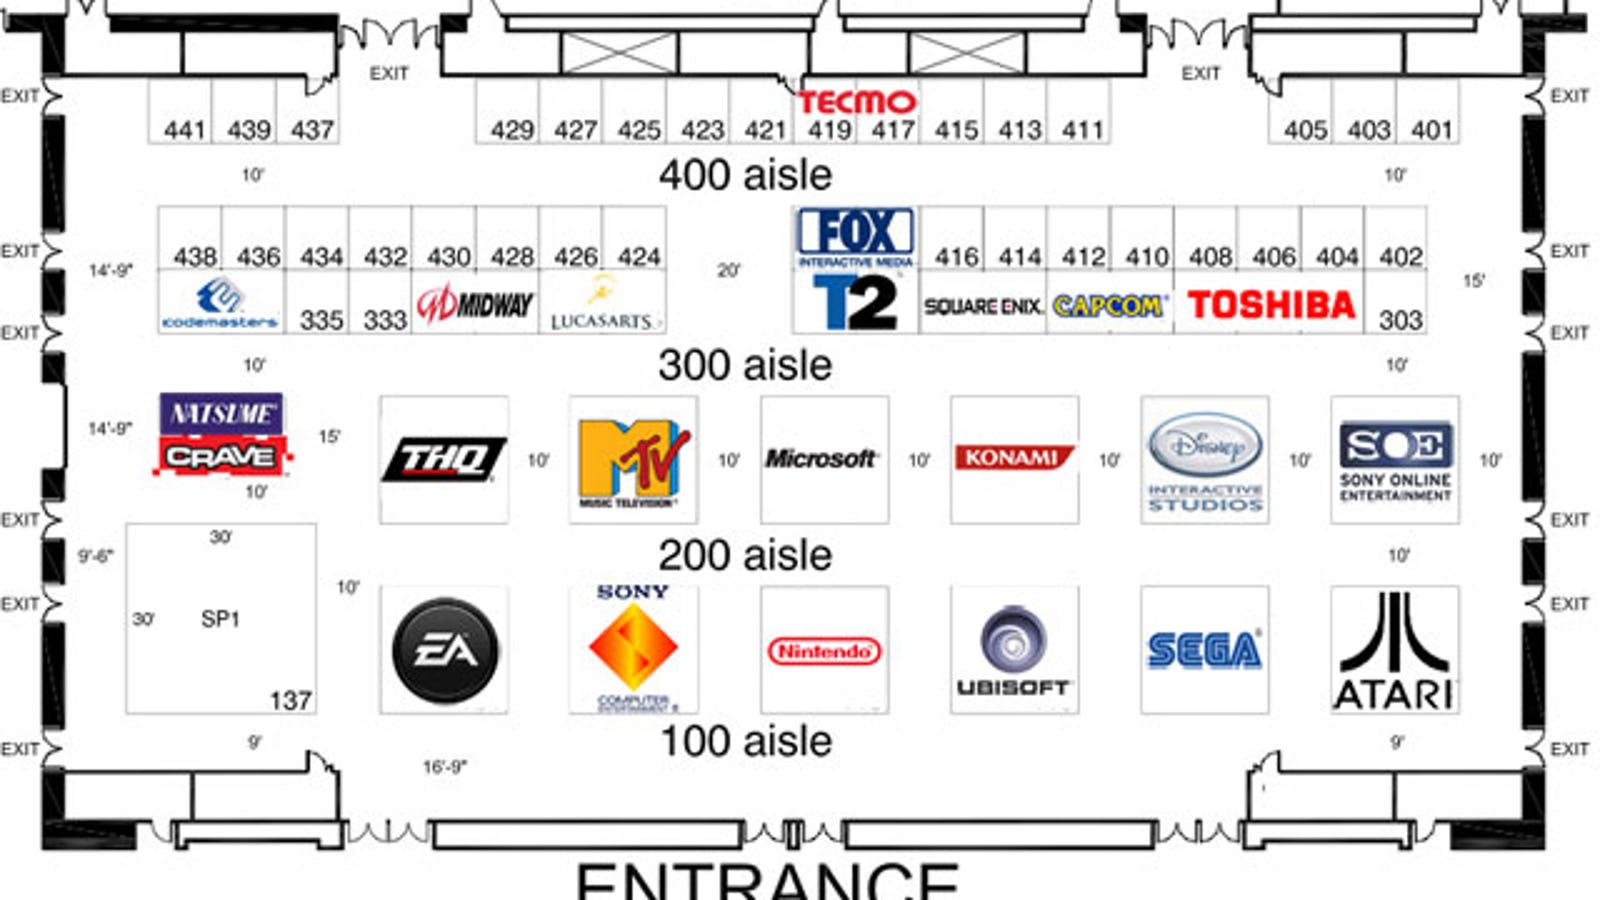 E3 Floorplan, Exhibitor List Revealed